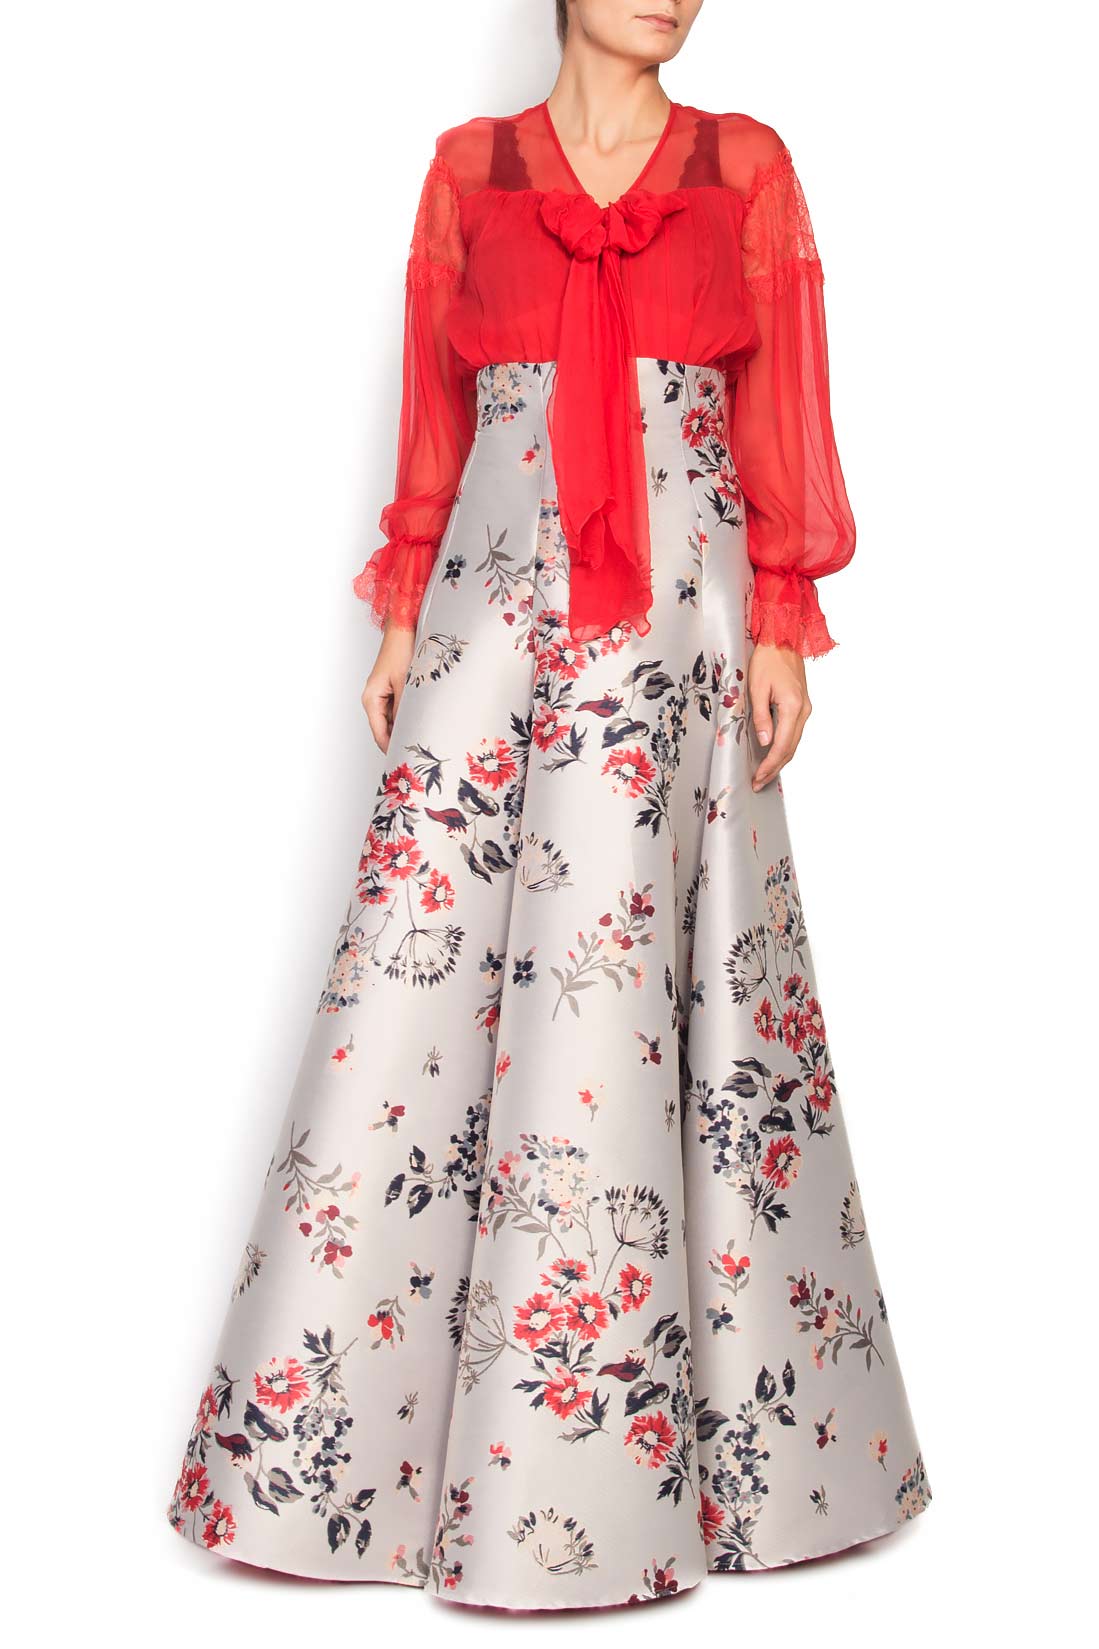 Floral-print jacquard maxi skirt Elena Perseil image 0